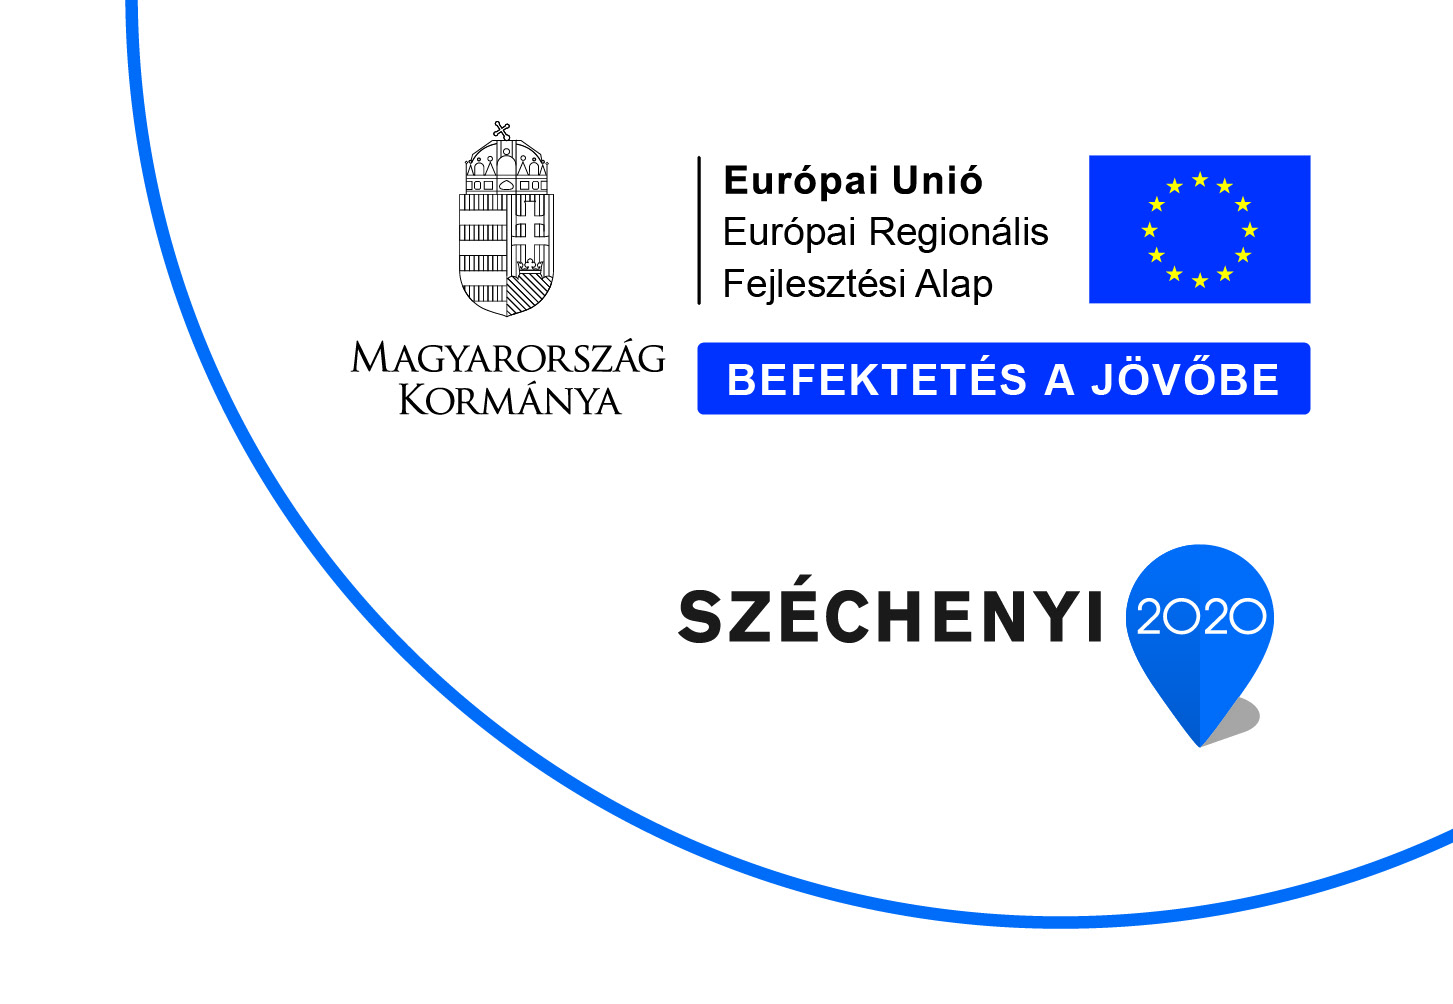 Széchenyi2020 logo